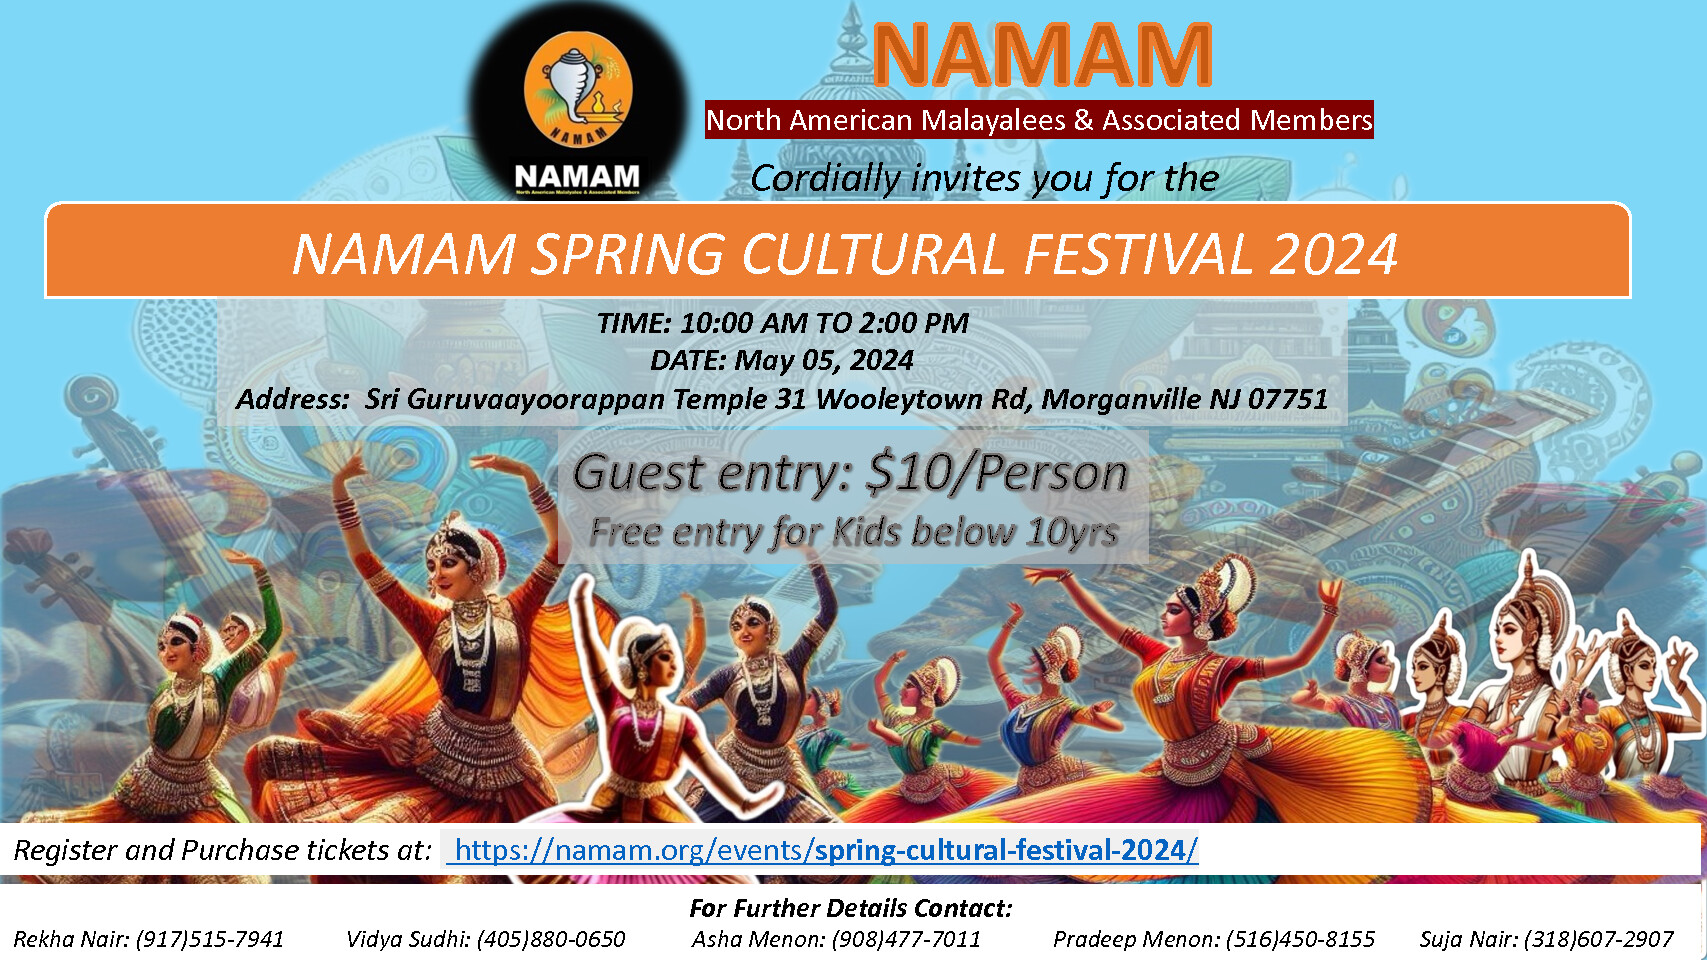 NAMAM Spring Cultural Festival 2024